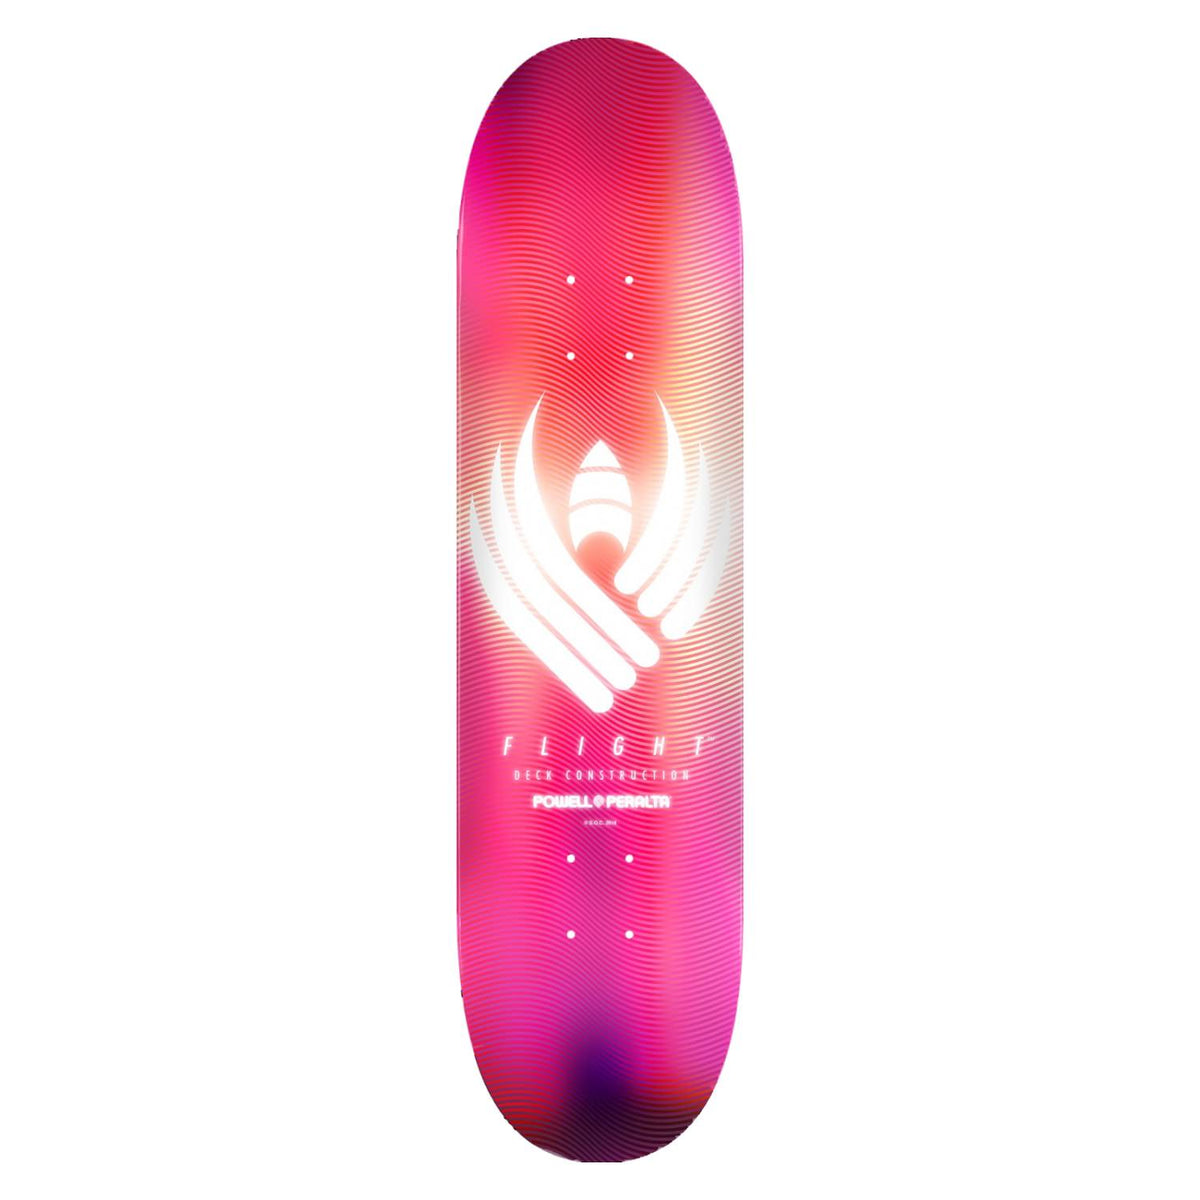 Powell-Peralta Flight Skateboard Deck, Glow Pink, Shape 247, 8.0"